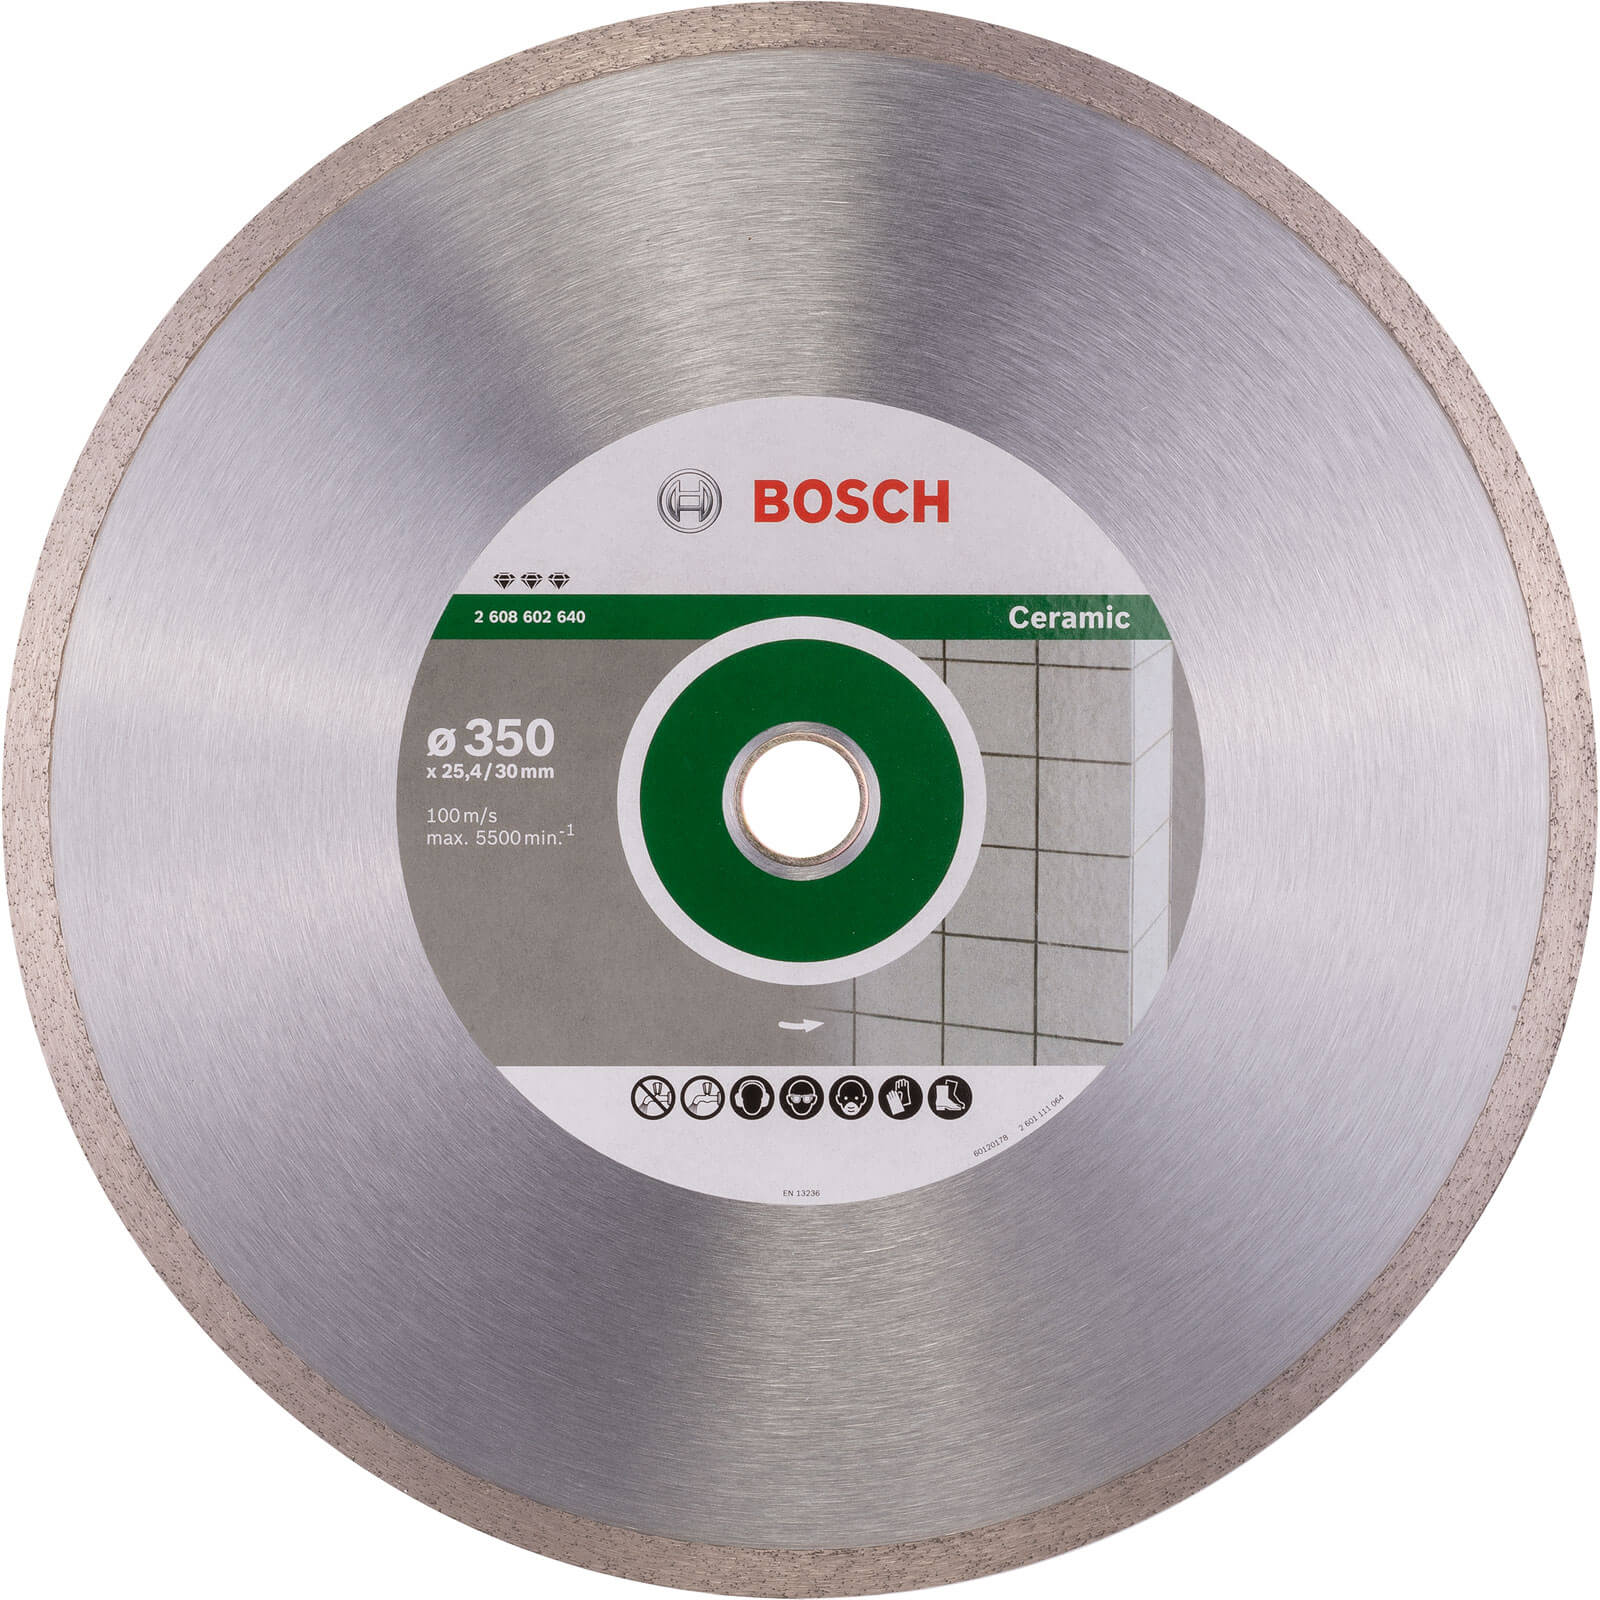 Photo of Bosch Ceramic Diamond Cutting Disc 350mm